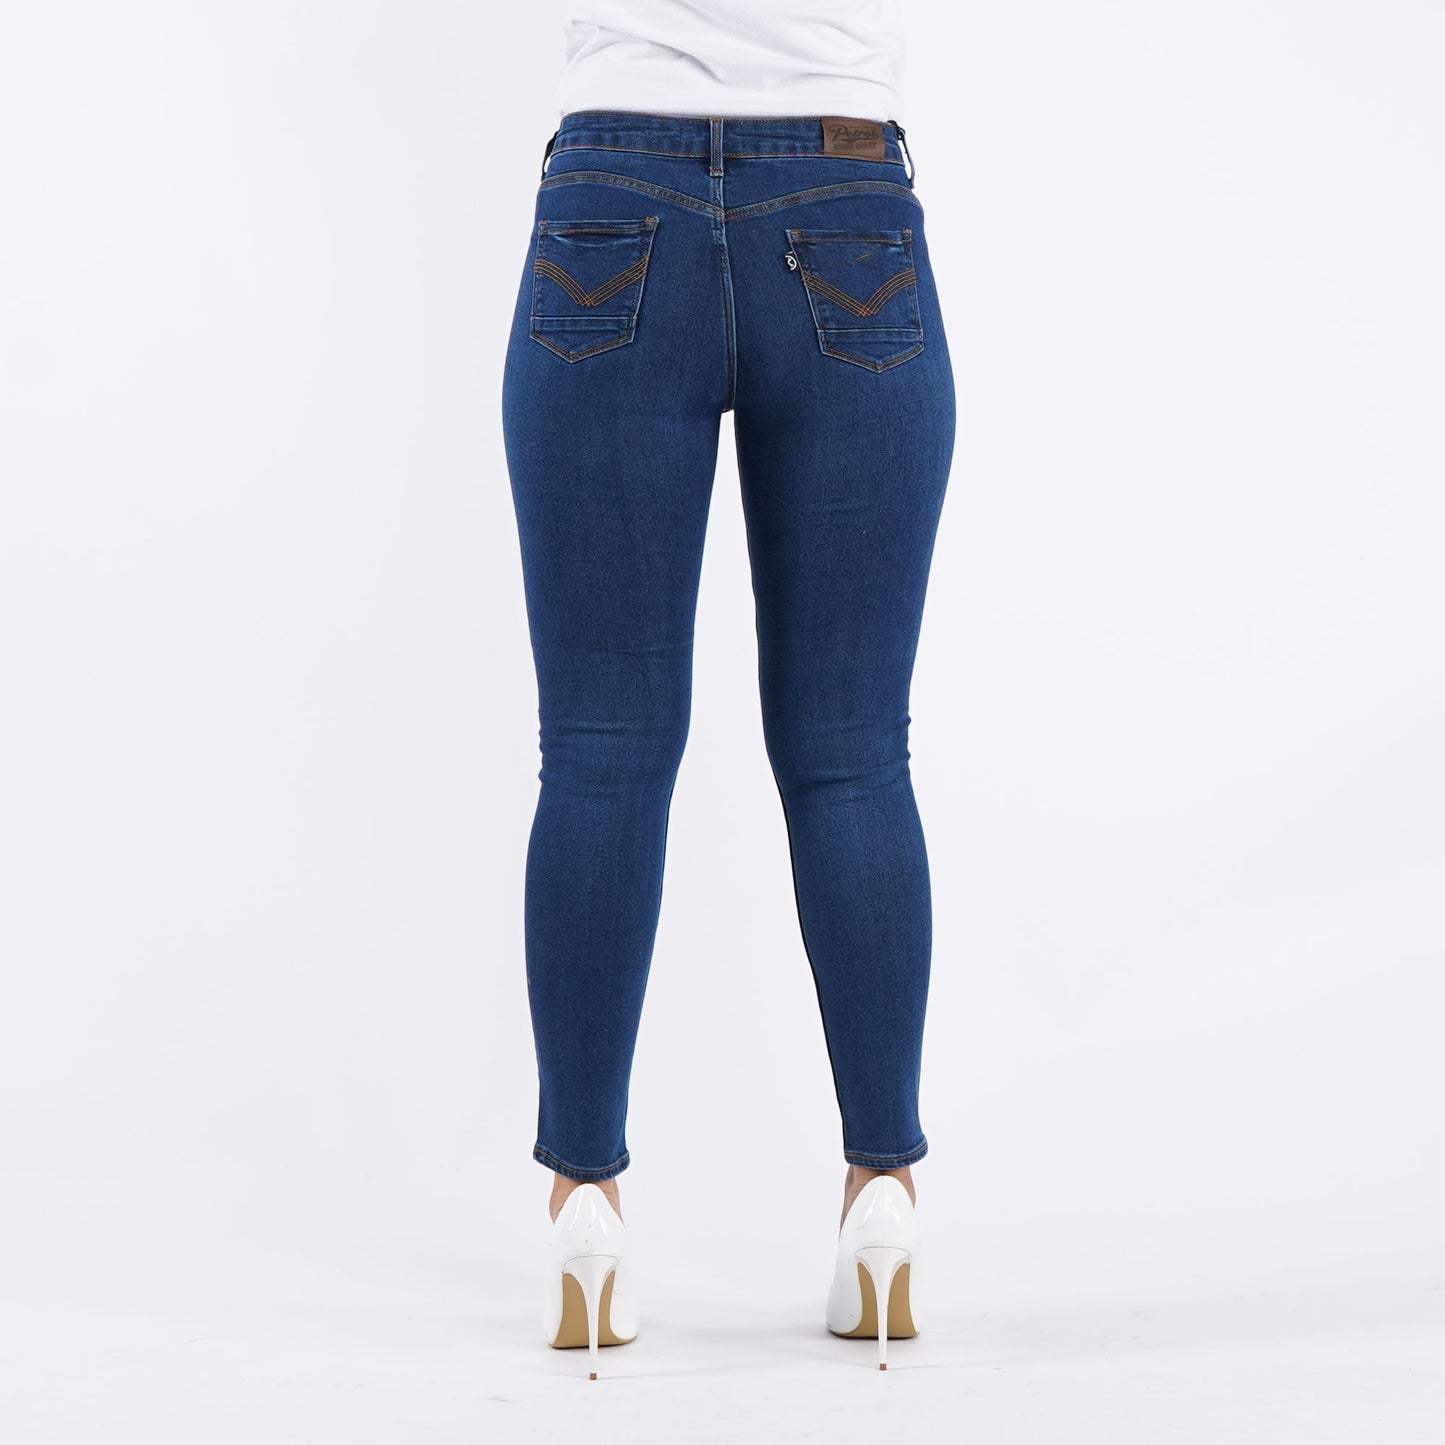 Petrol Basic Denim Pants for Ladies Super Skinny Fitting Extreme Skinny Hi Rise Trendy fashion Casual Bottoms Medium Shade Jeans for Ladies 147075-U (Medium Shade)